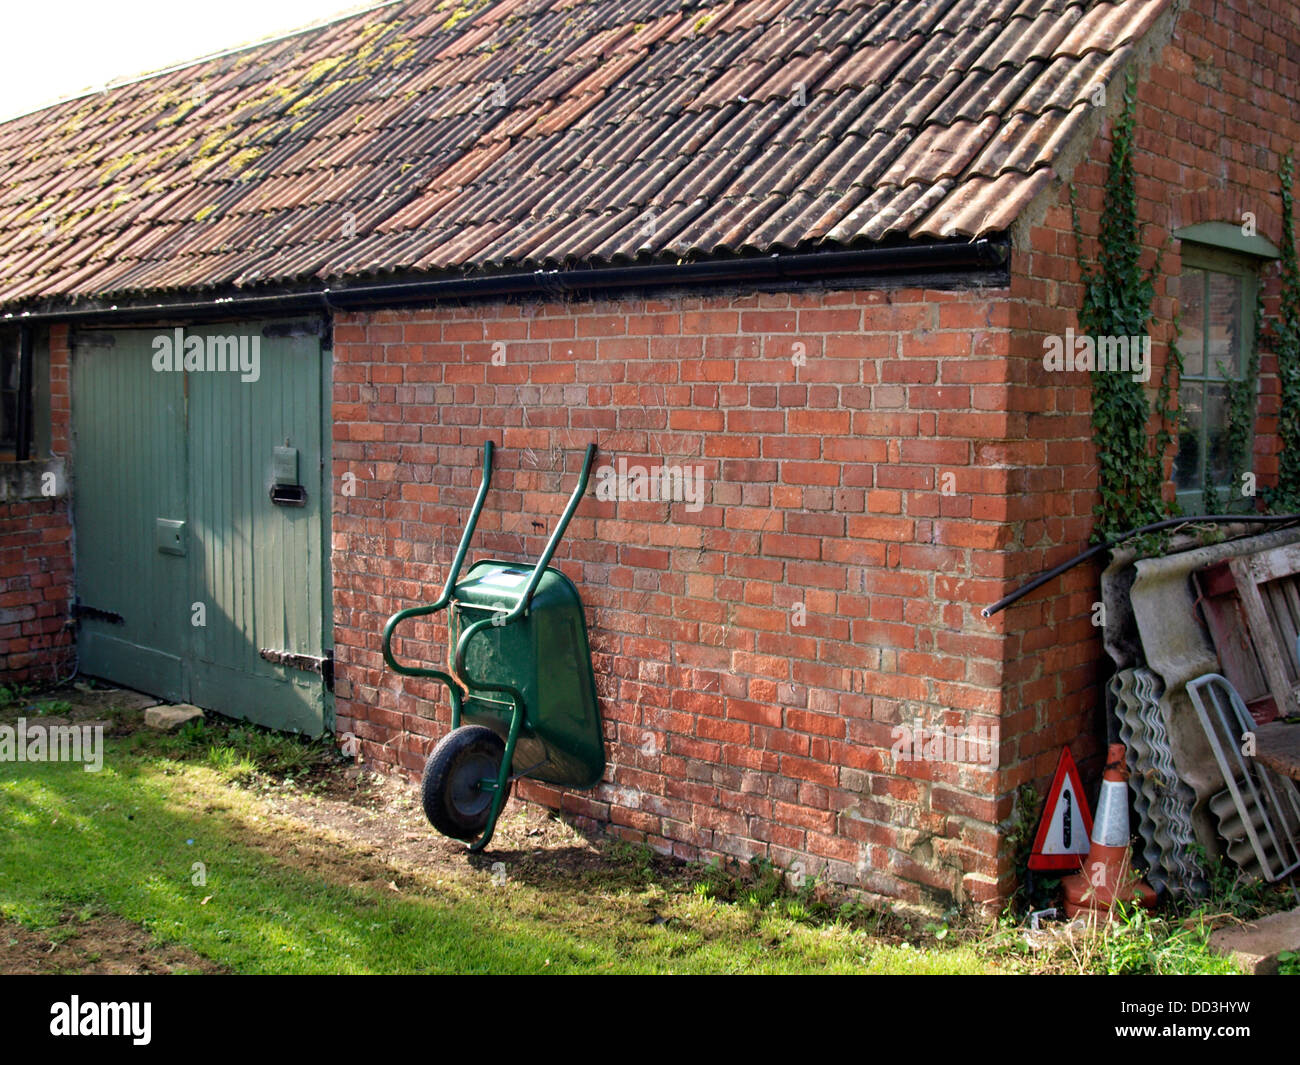 Wheelbarrow lent against the wall of an outbuilding, UK 2013 Stock Photo